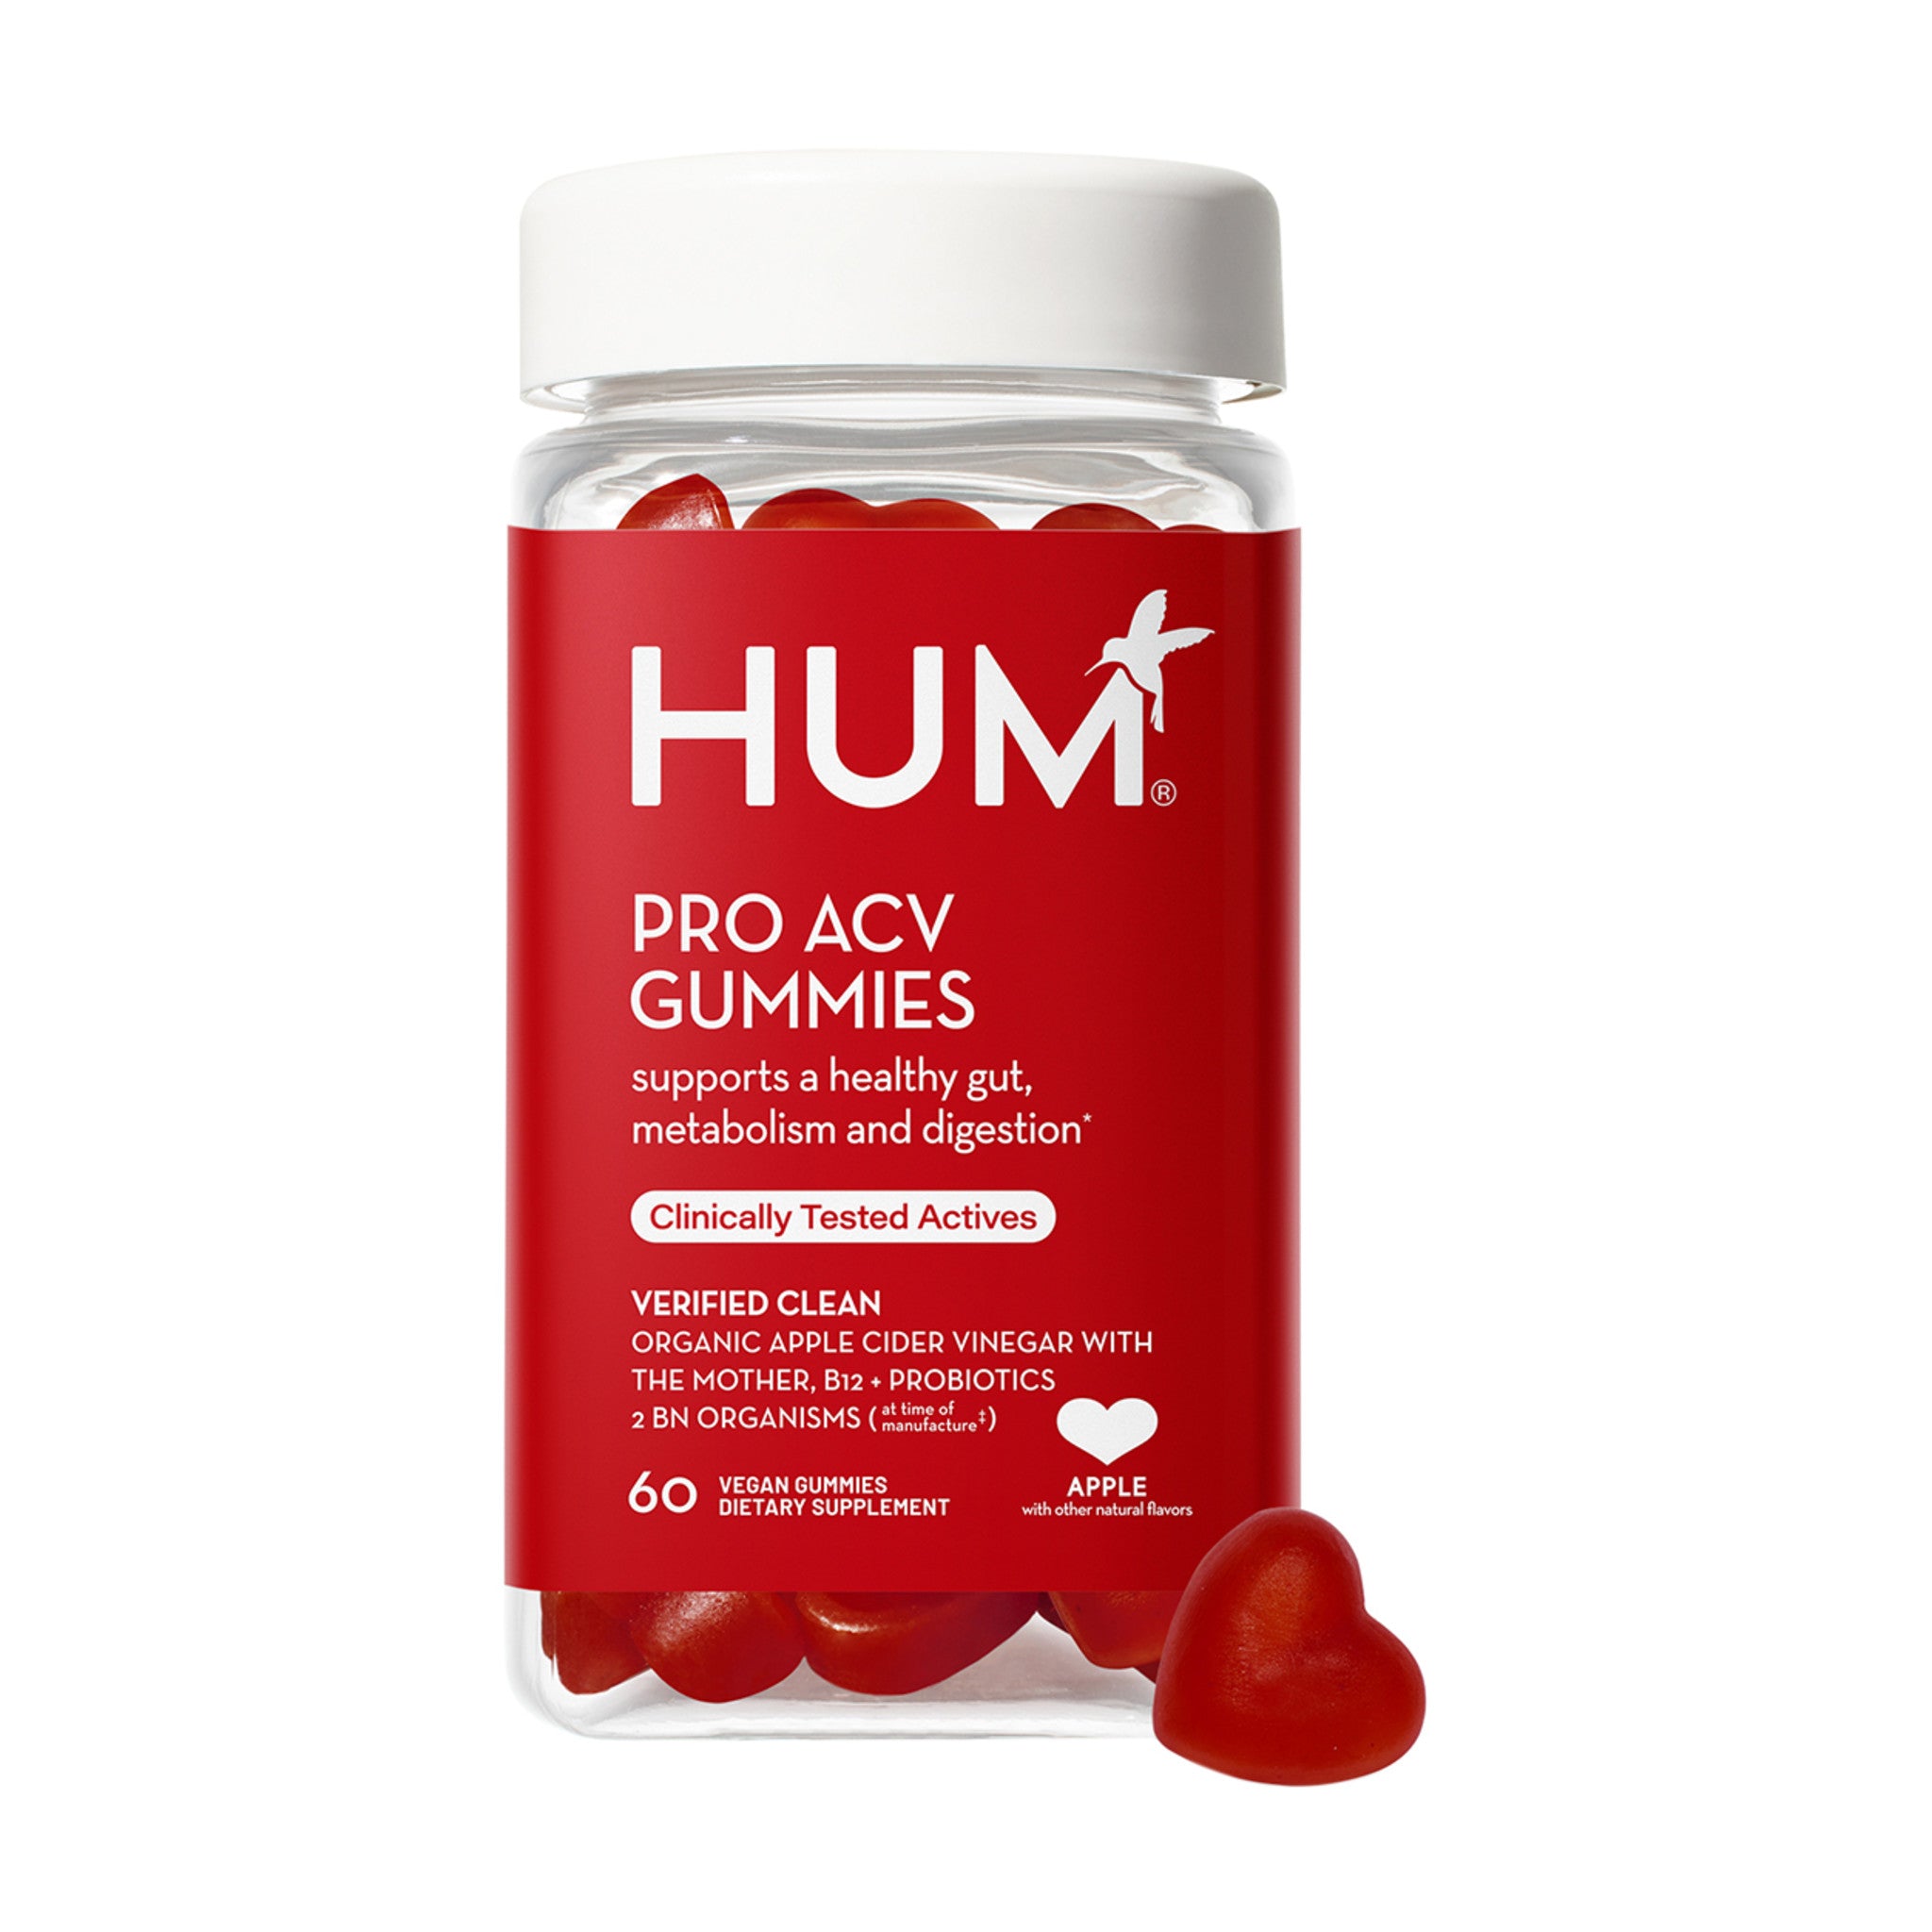 Hum Pro ACV Gummies main image.